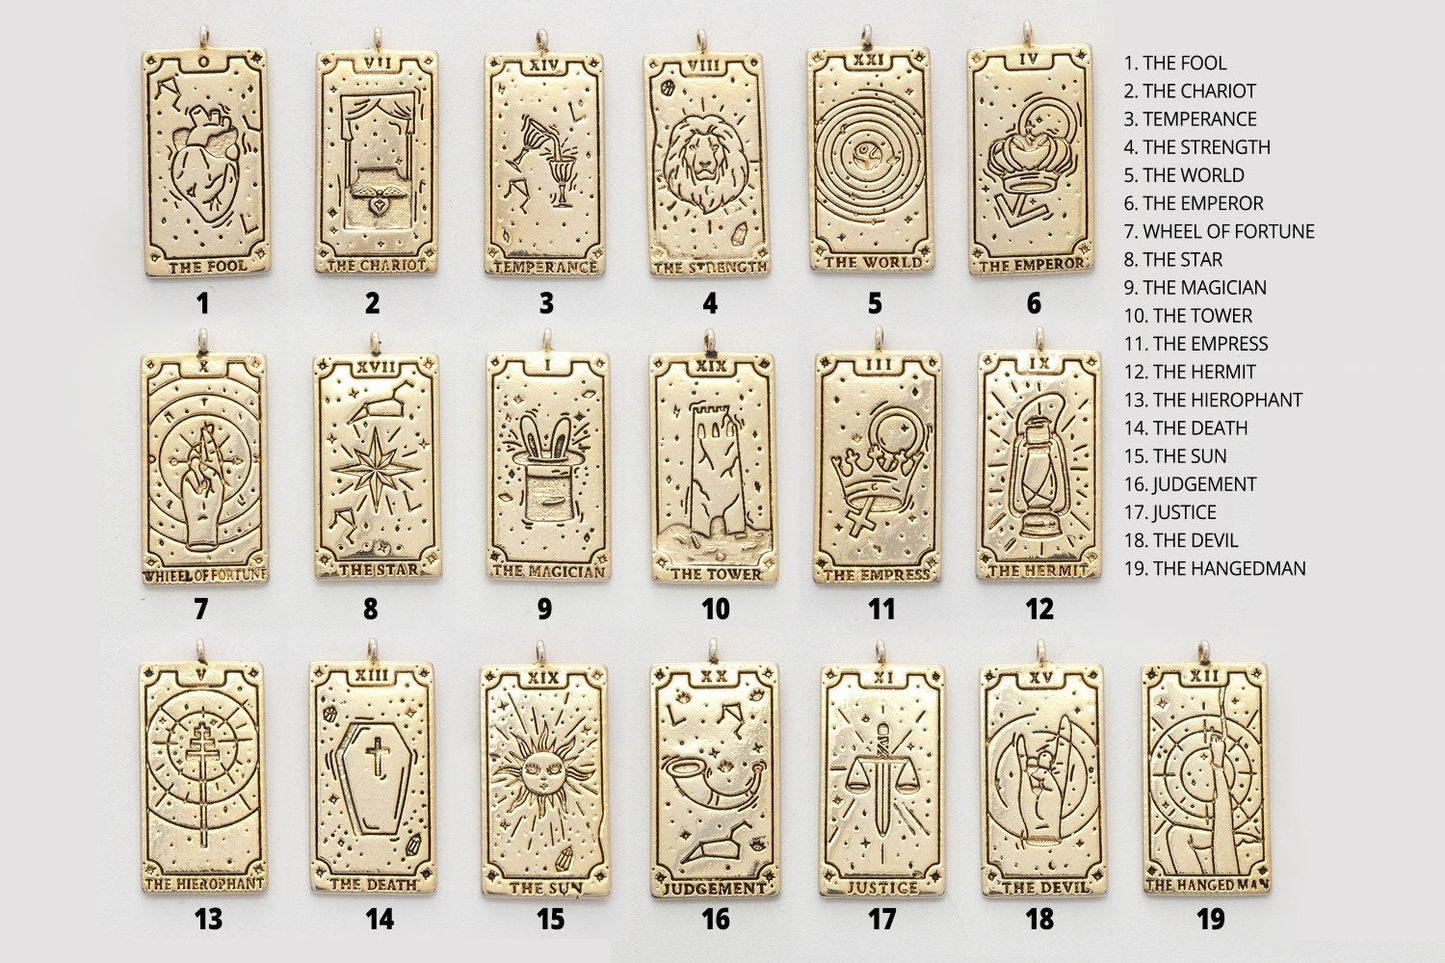 Minimalist Tarot Necklace | Gold Tarot Card | Dainty Gold Pendant